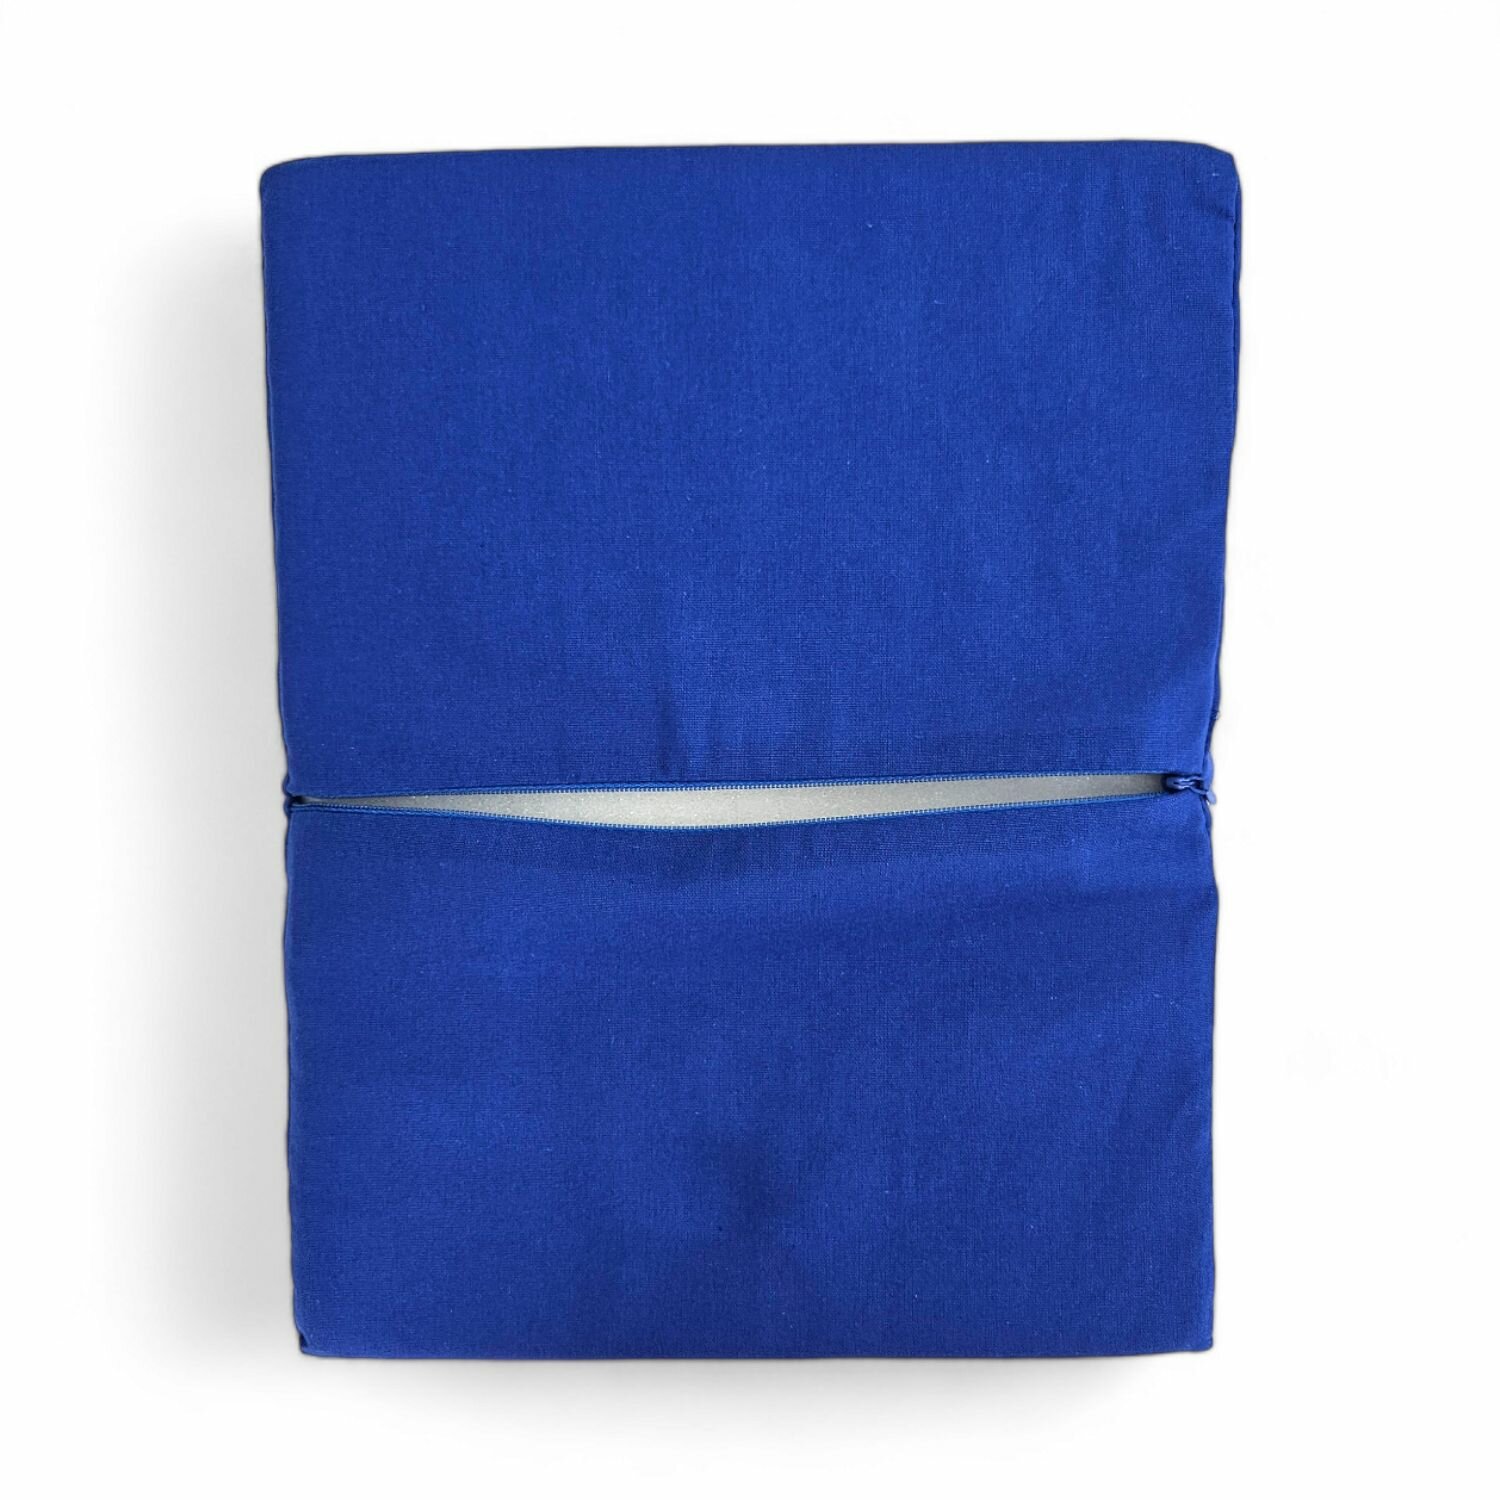 Массажная подушка Zenet ZET-609 акупунктурная, голубой